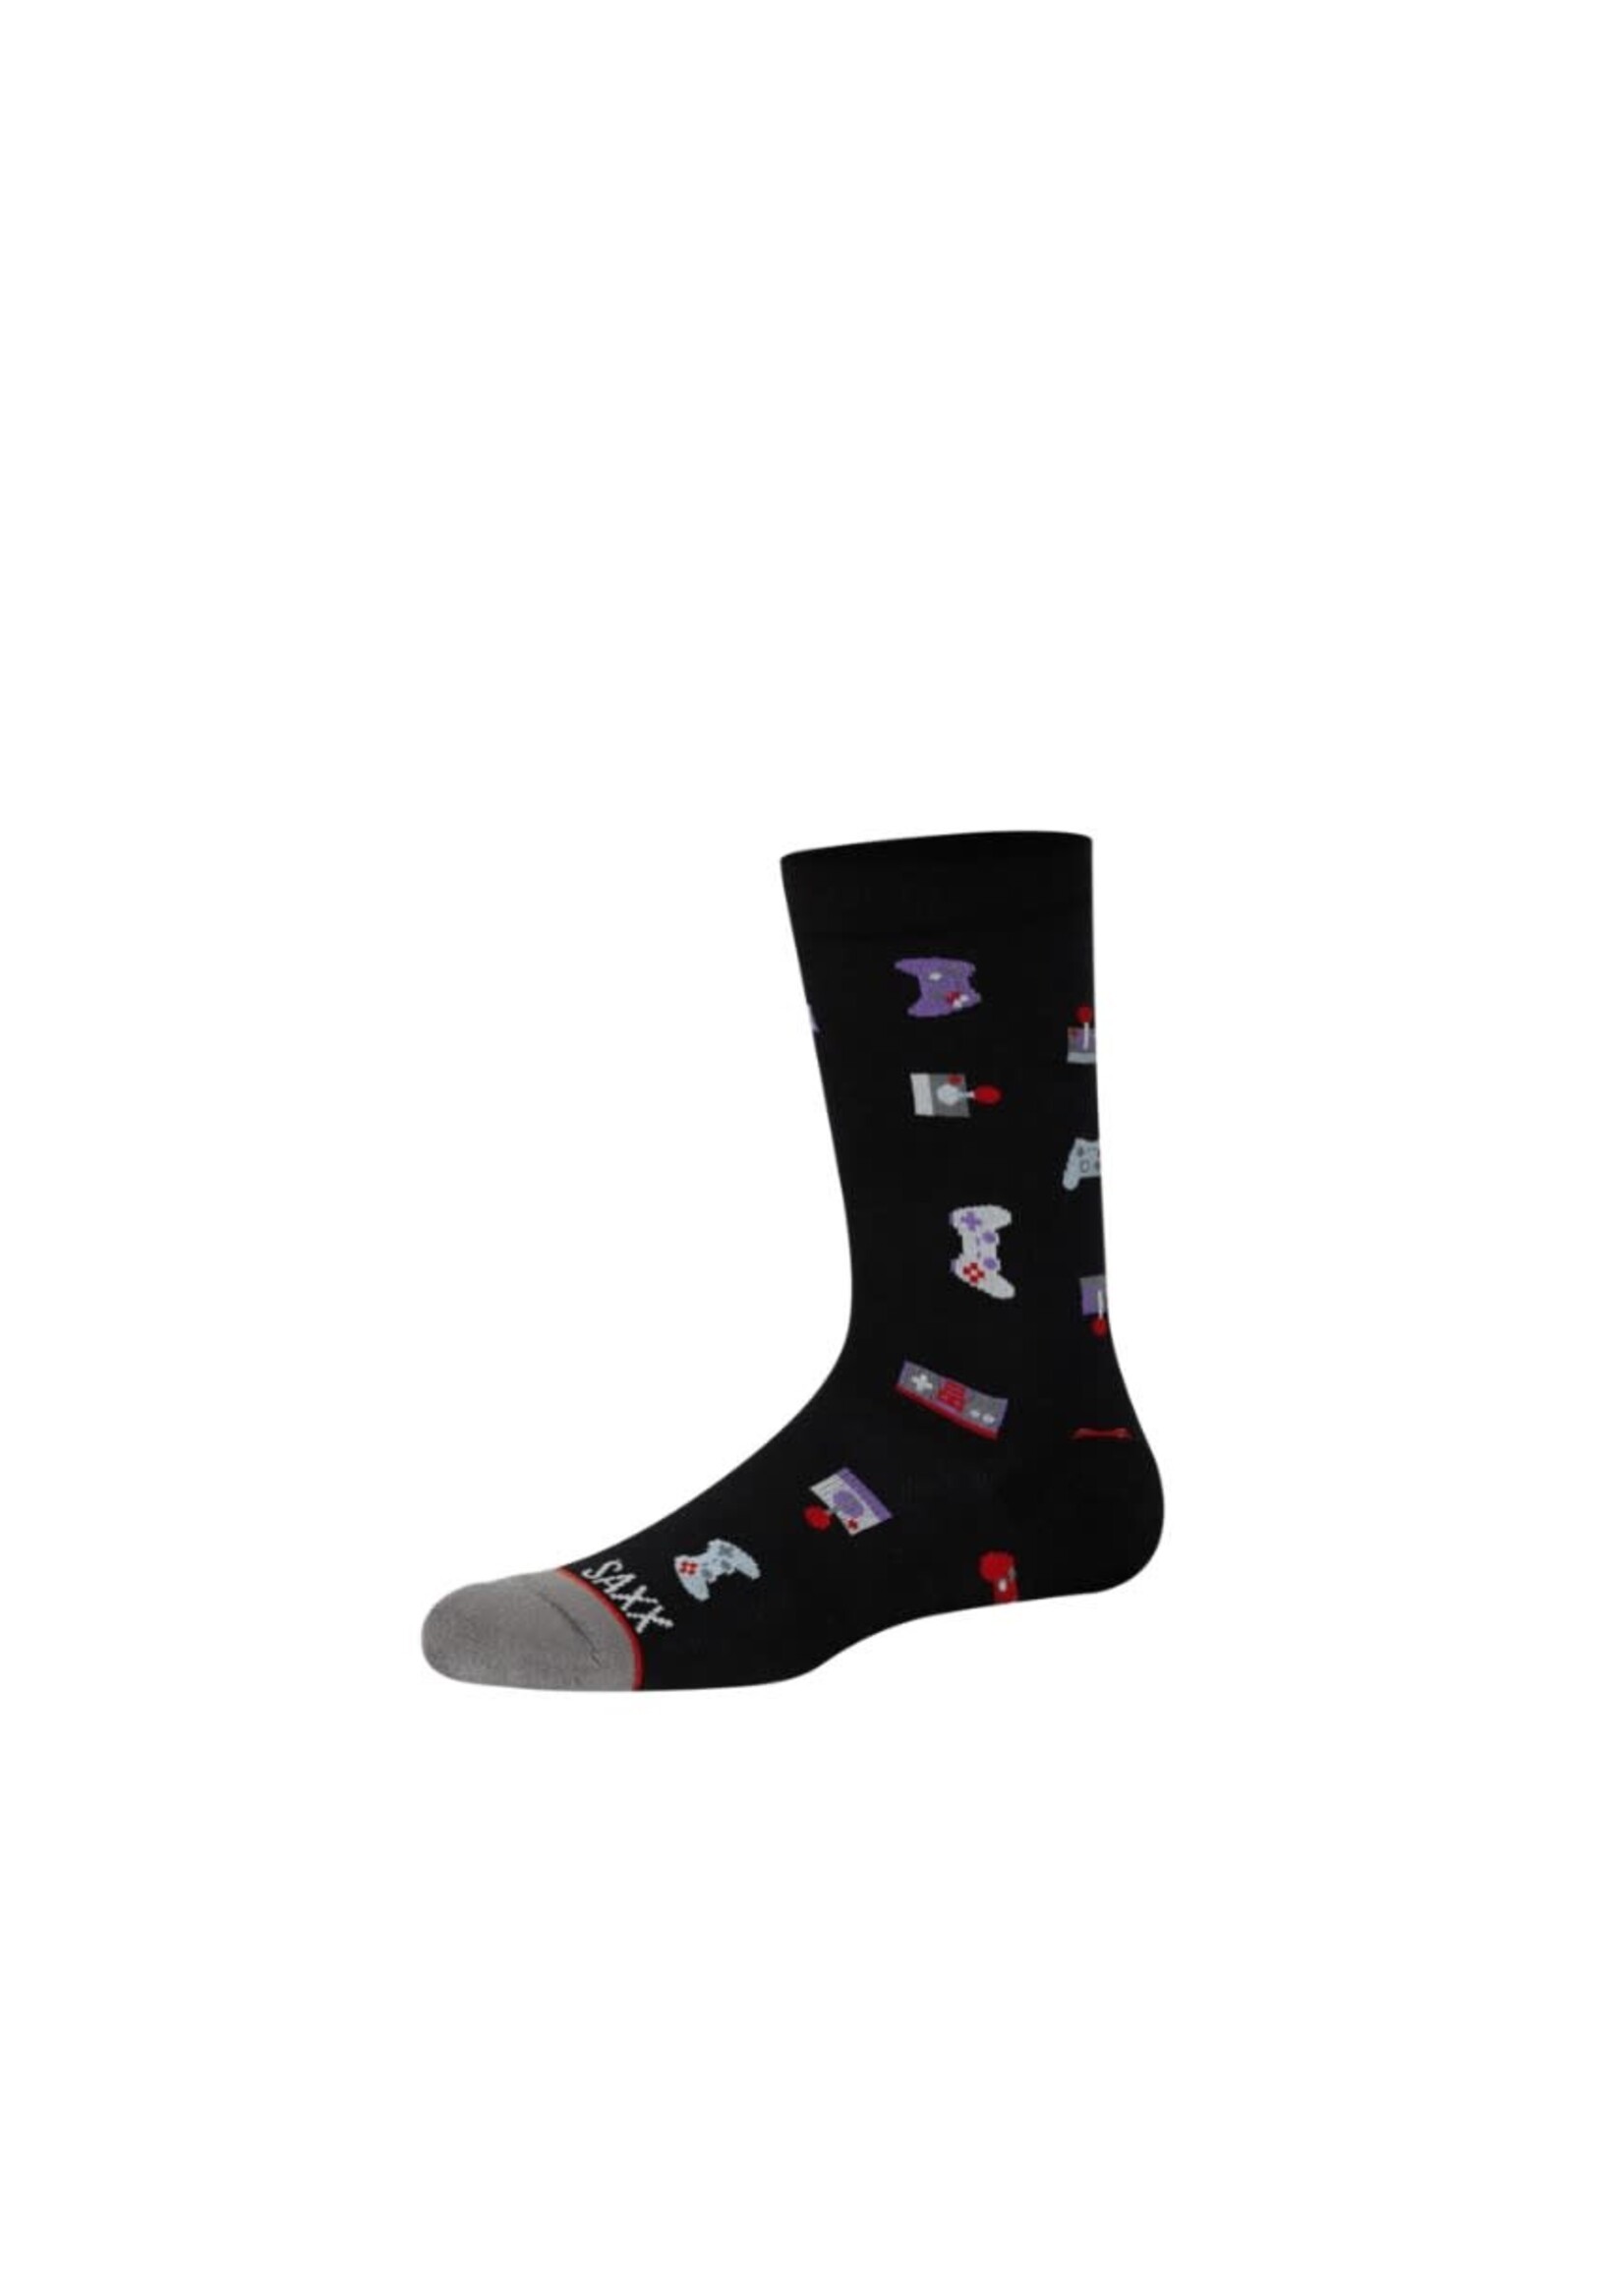 Secret Cotton Comfort Fashion Socks Rib/Cuff Socks - Black - 3 pair